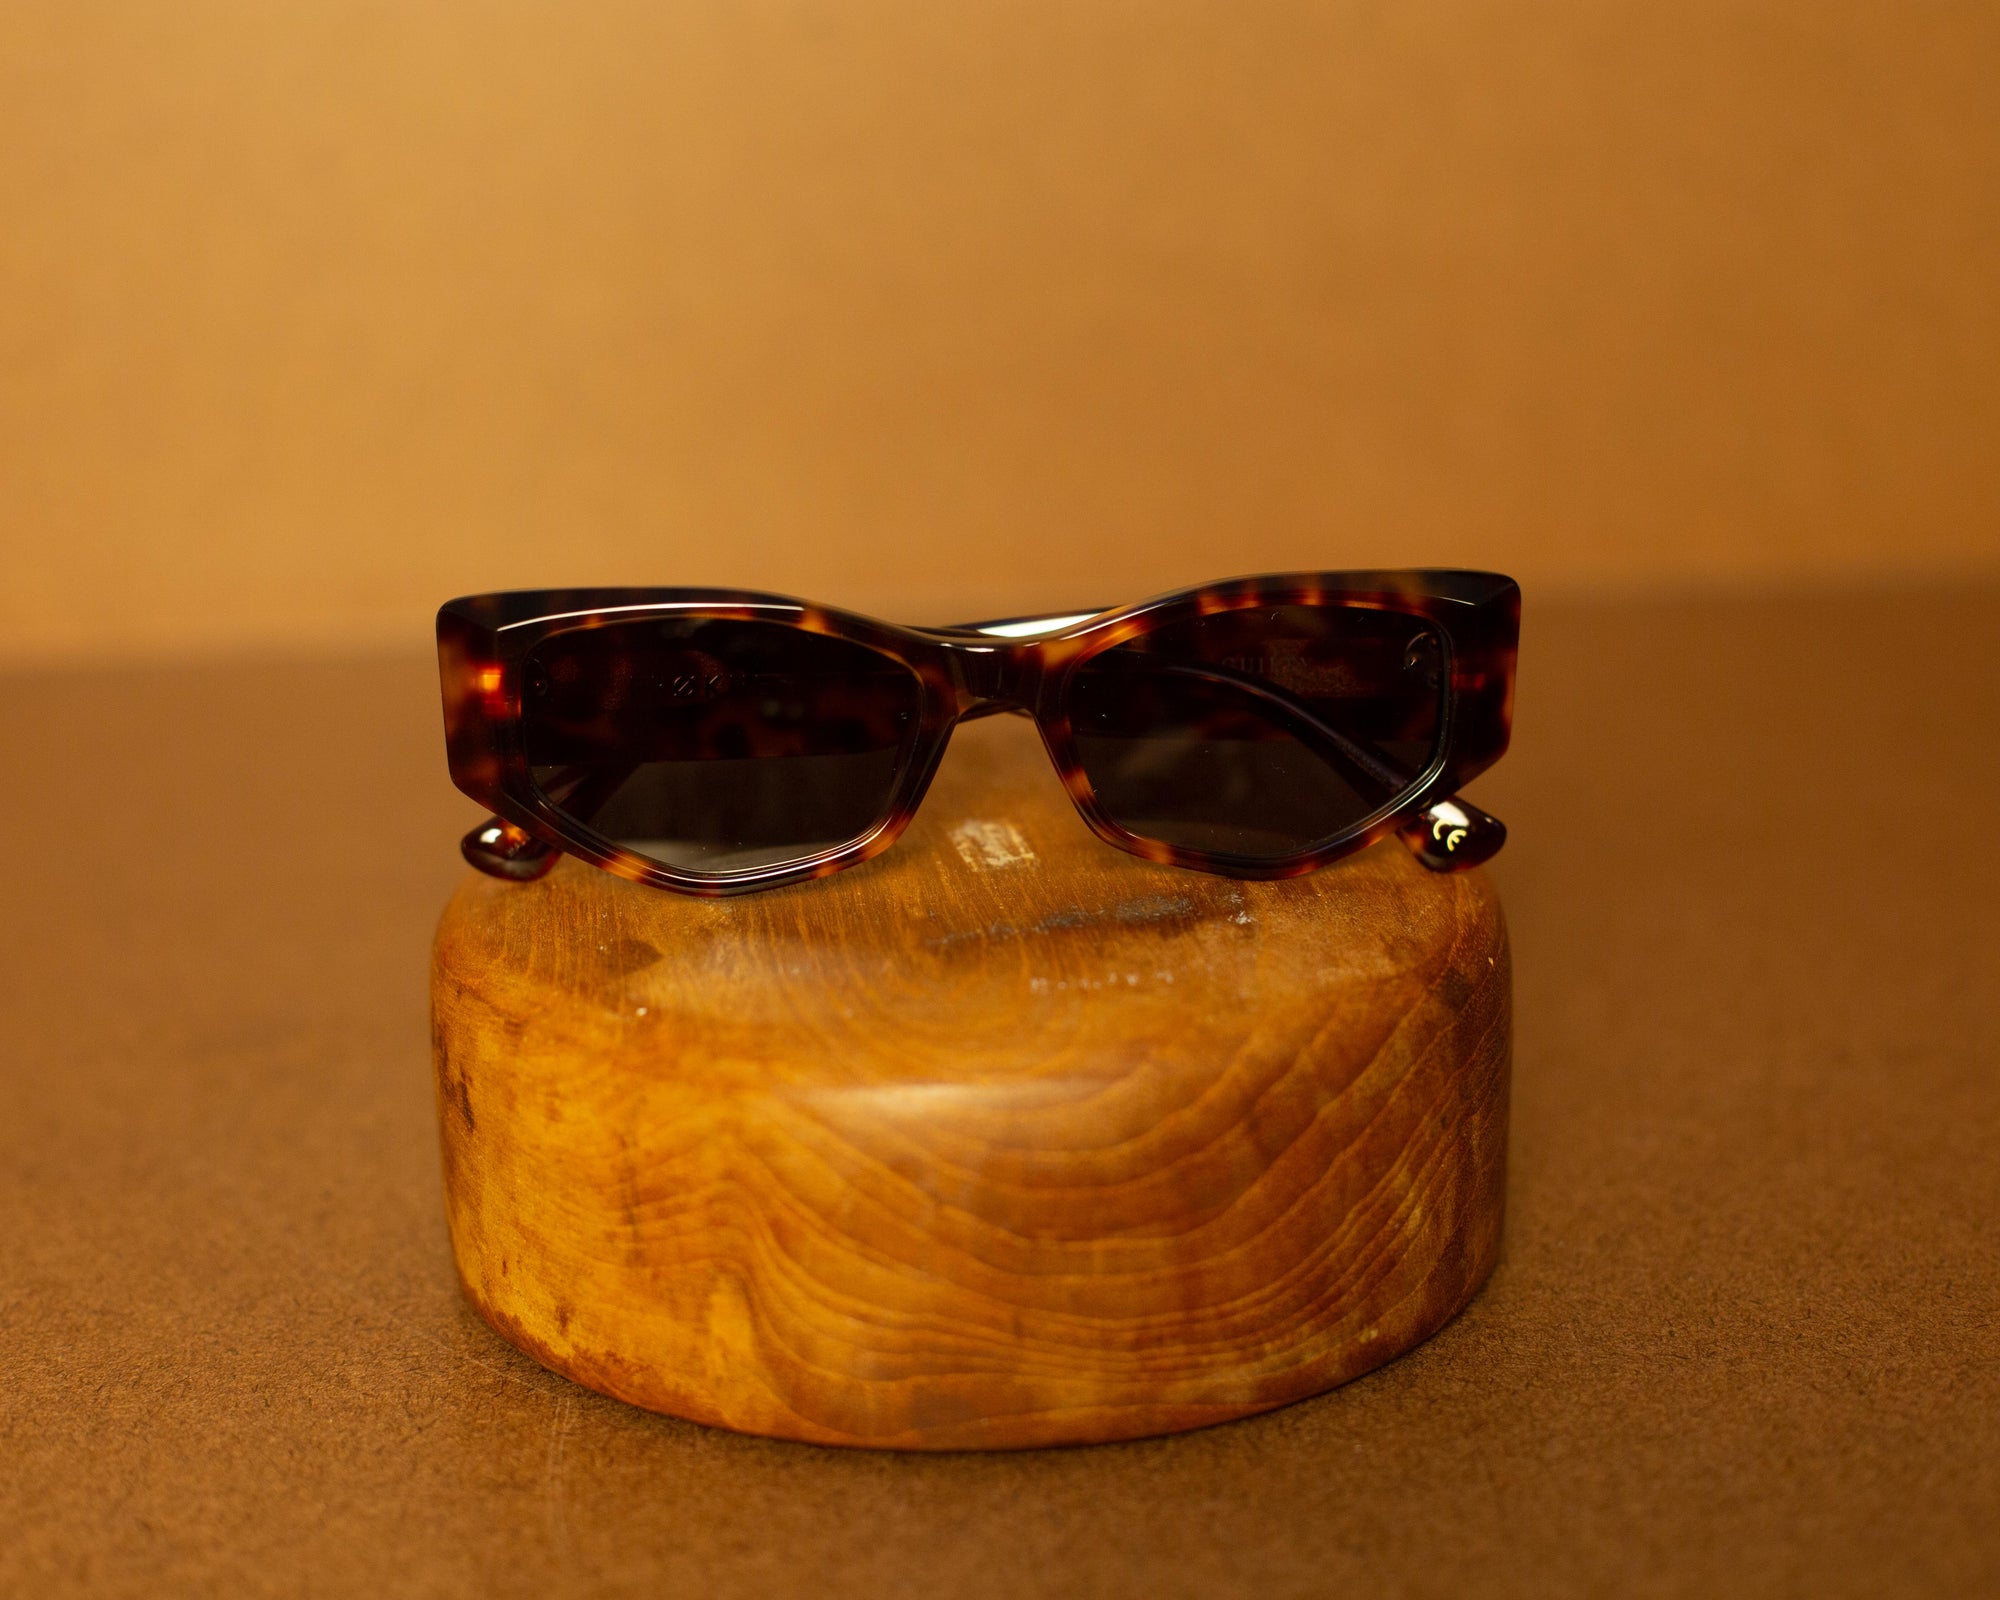 Epokhe Sunglasses - Stereo brown background